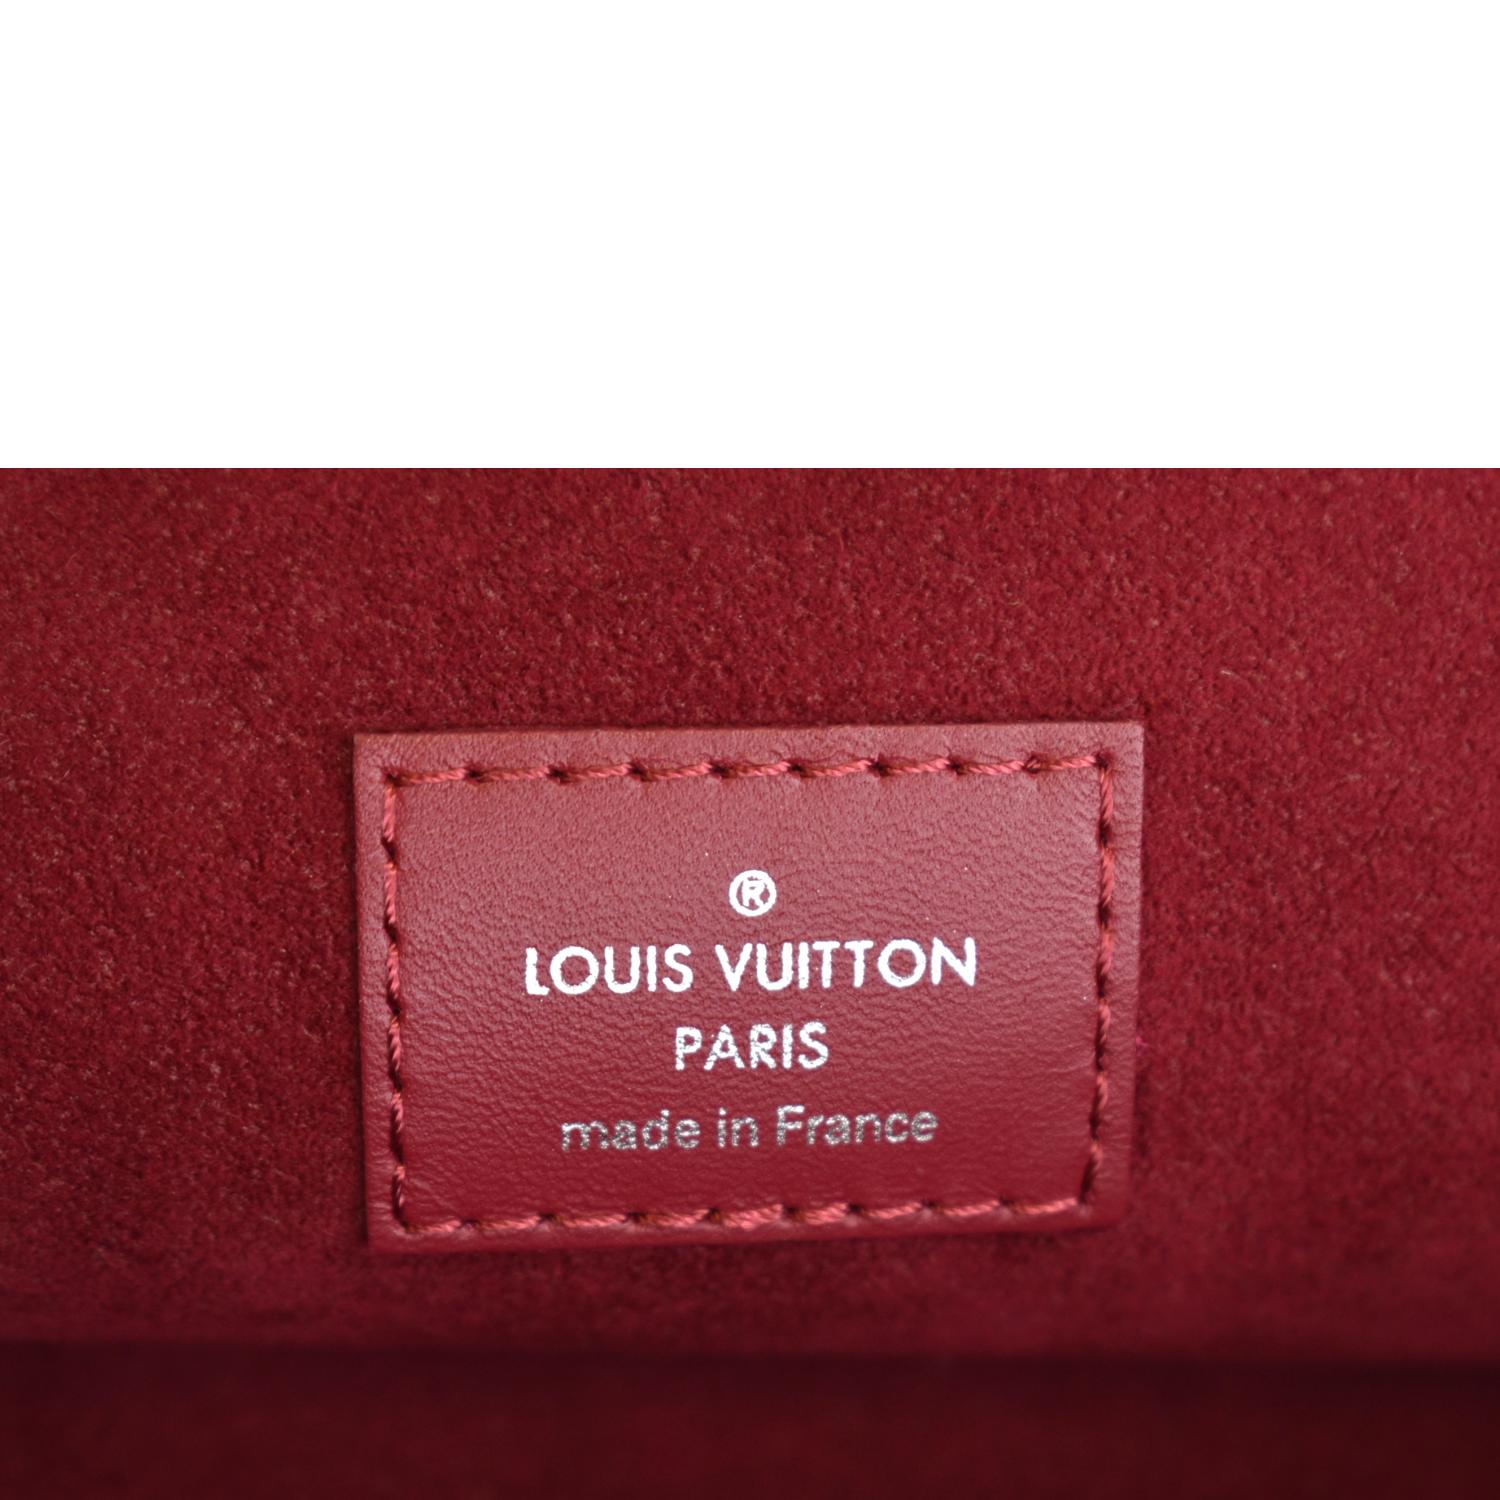 Louis Vuitton Neverfull Tote Epi Leather MM Orange 2397881